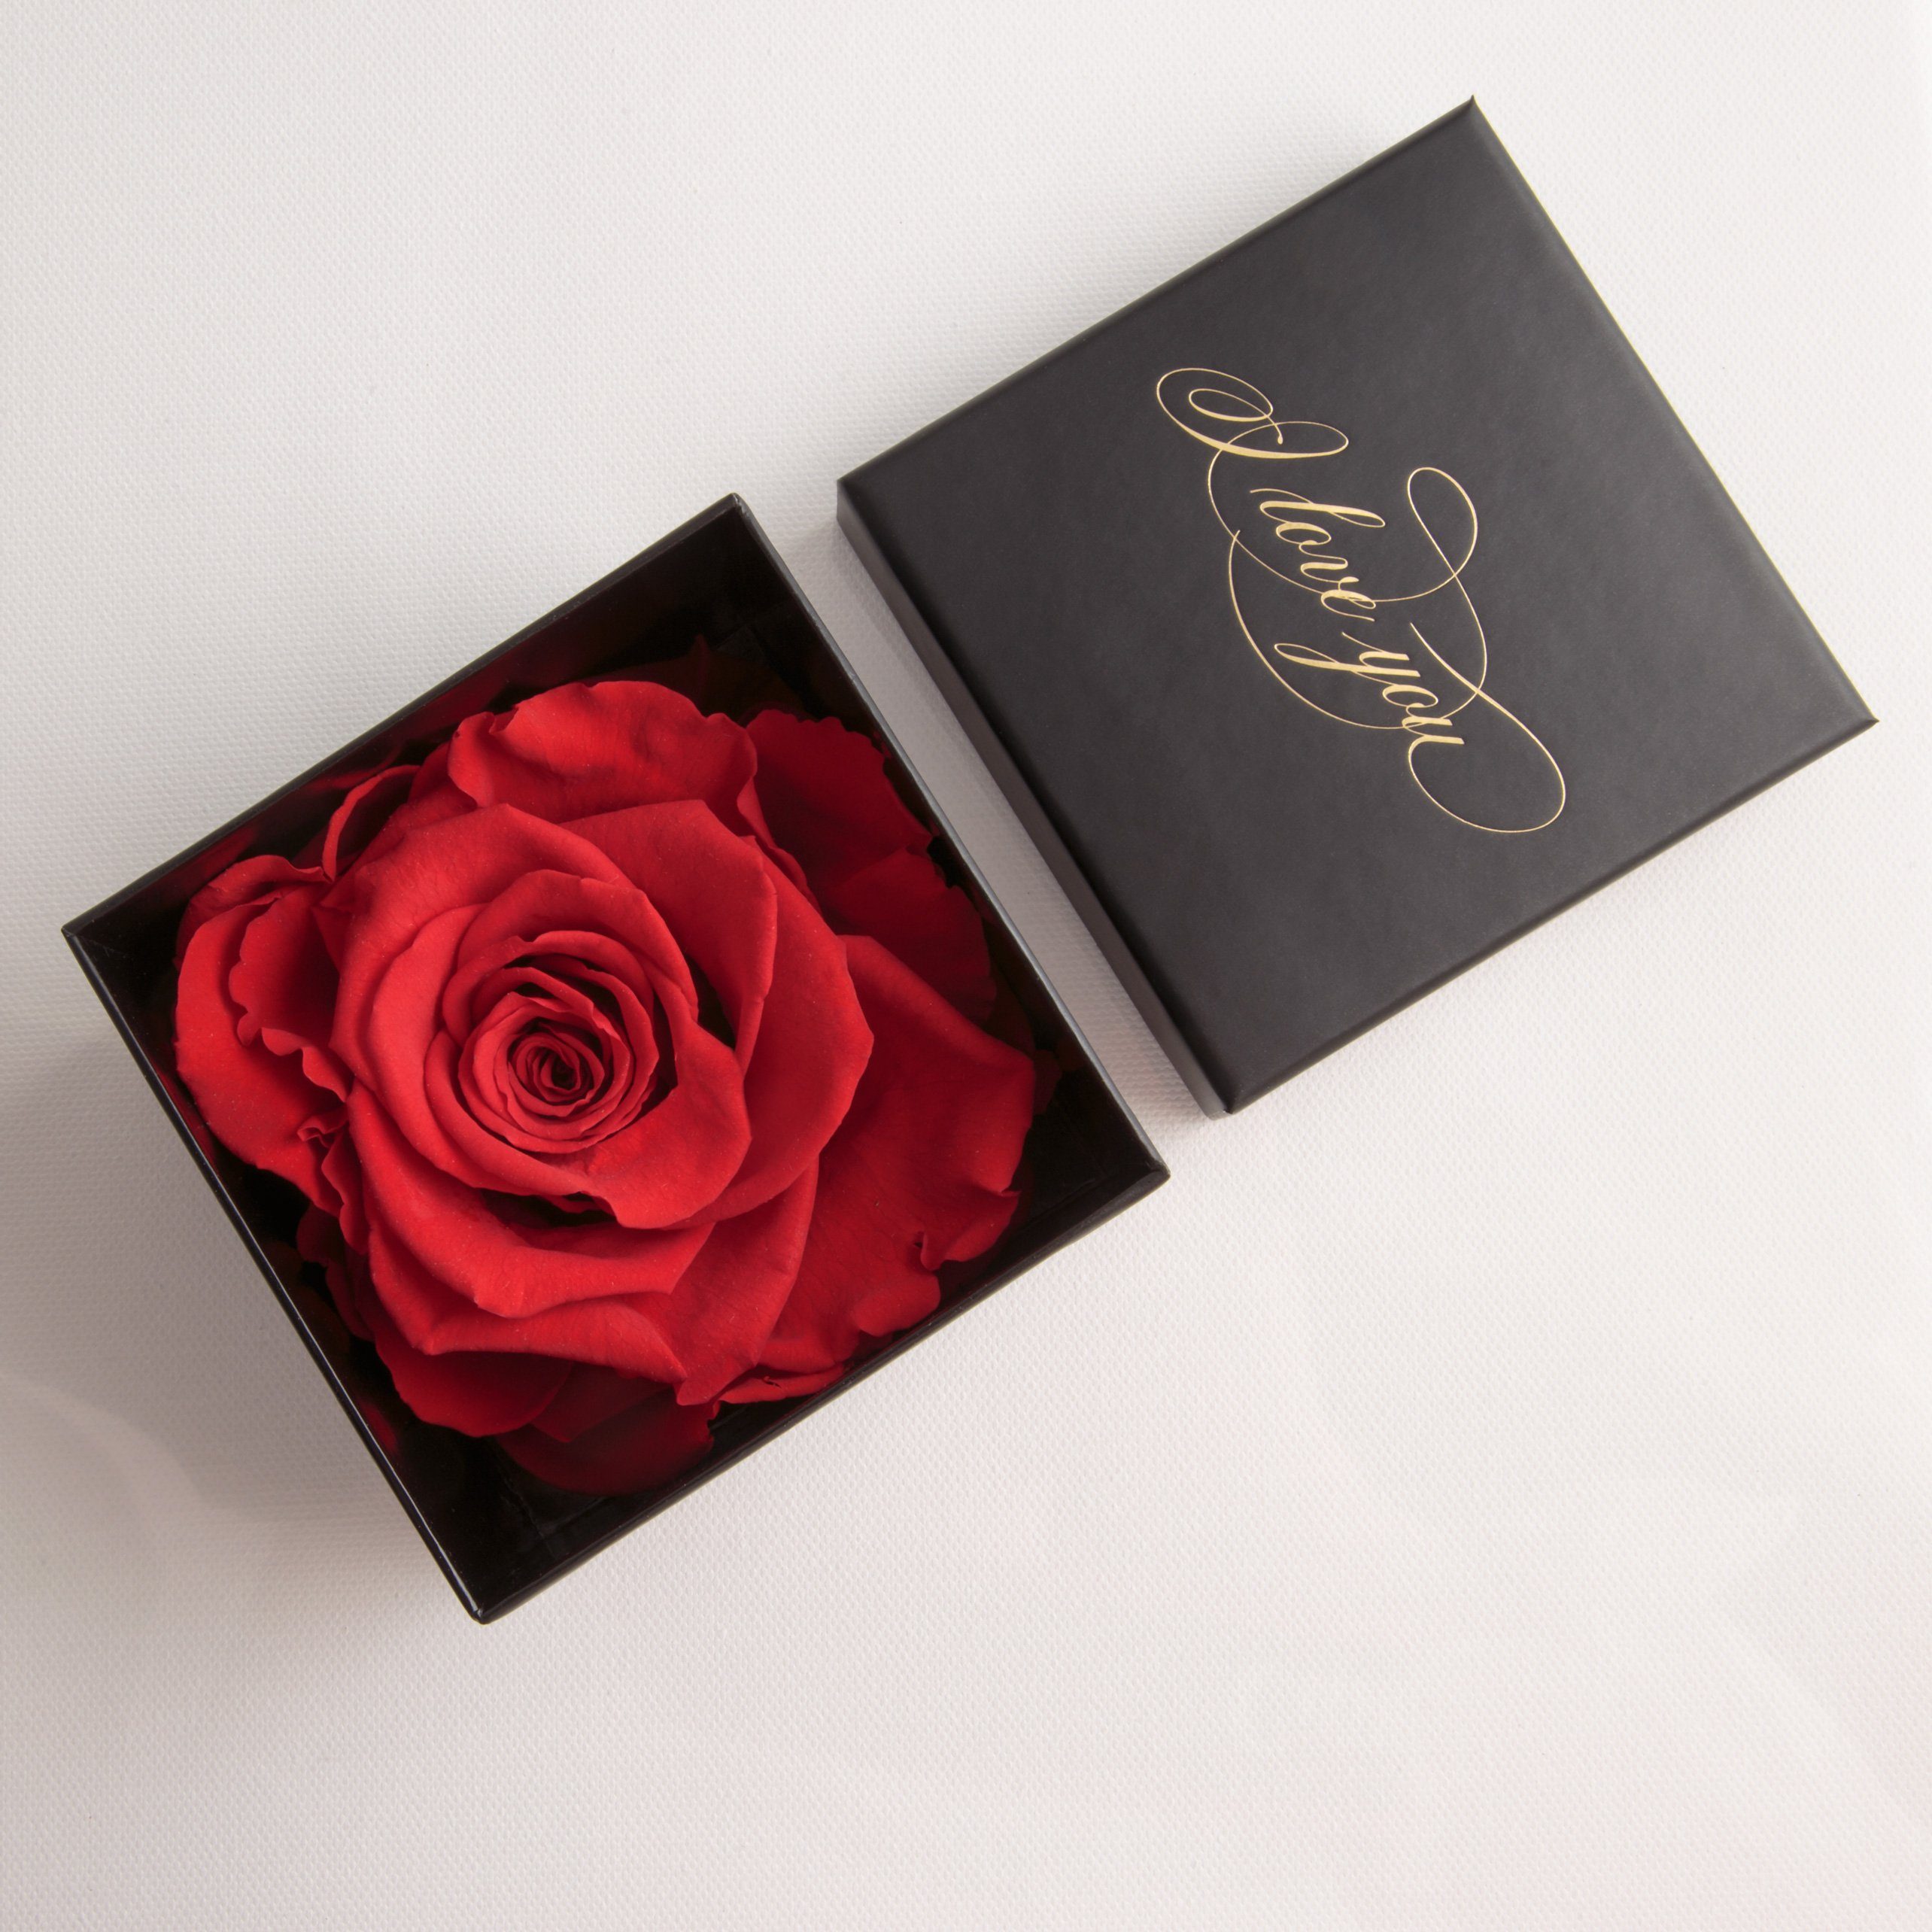 Kunstblume Idee konserviert Geschenk Echte 6 Rose Rose, Infinity Liebesbeweis cm, Höhe Rot ROSEMARIE SCHULZ Box Rose I Heidelberg, Love You